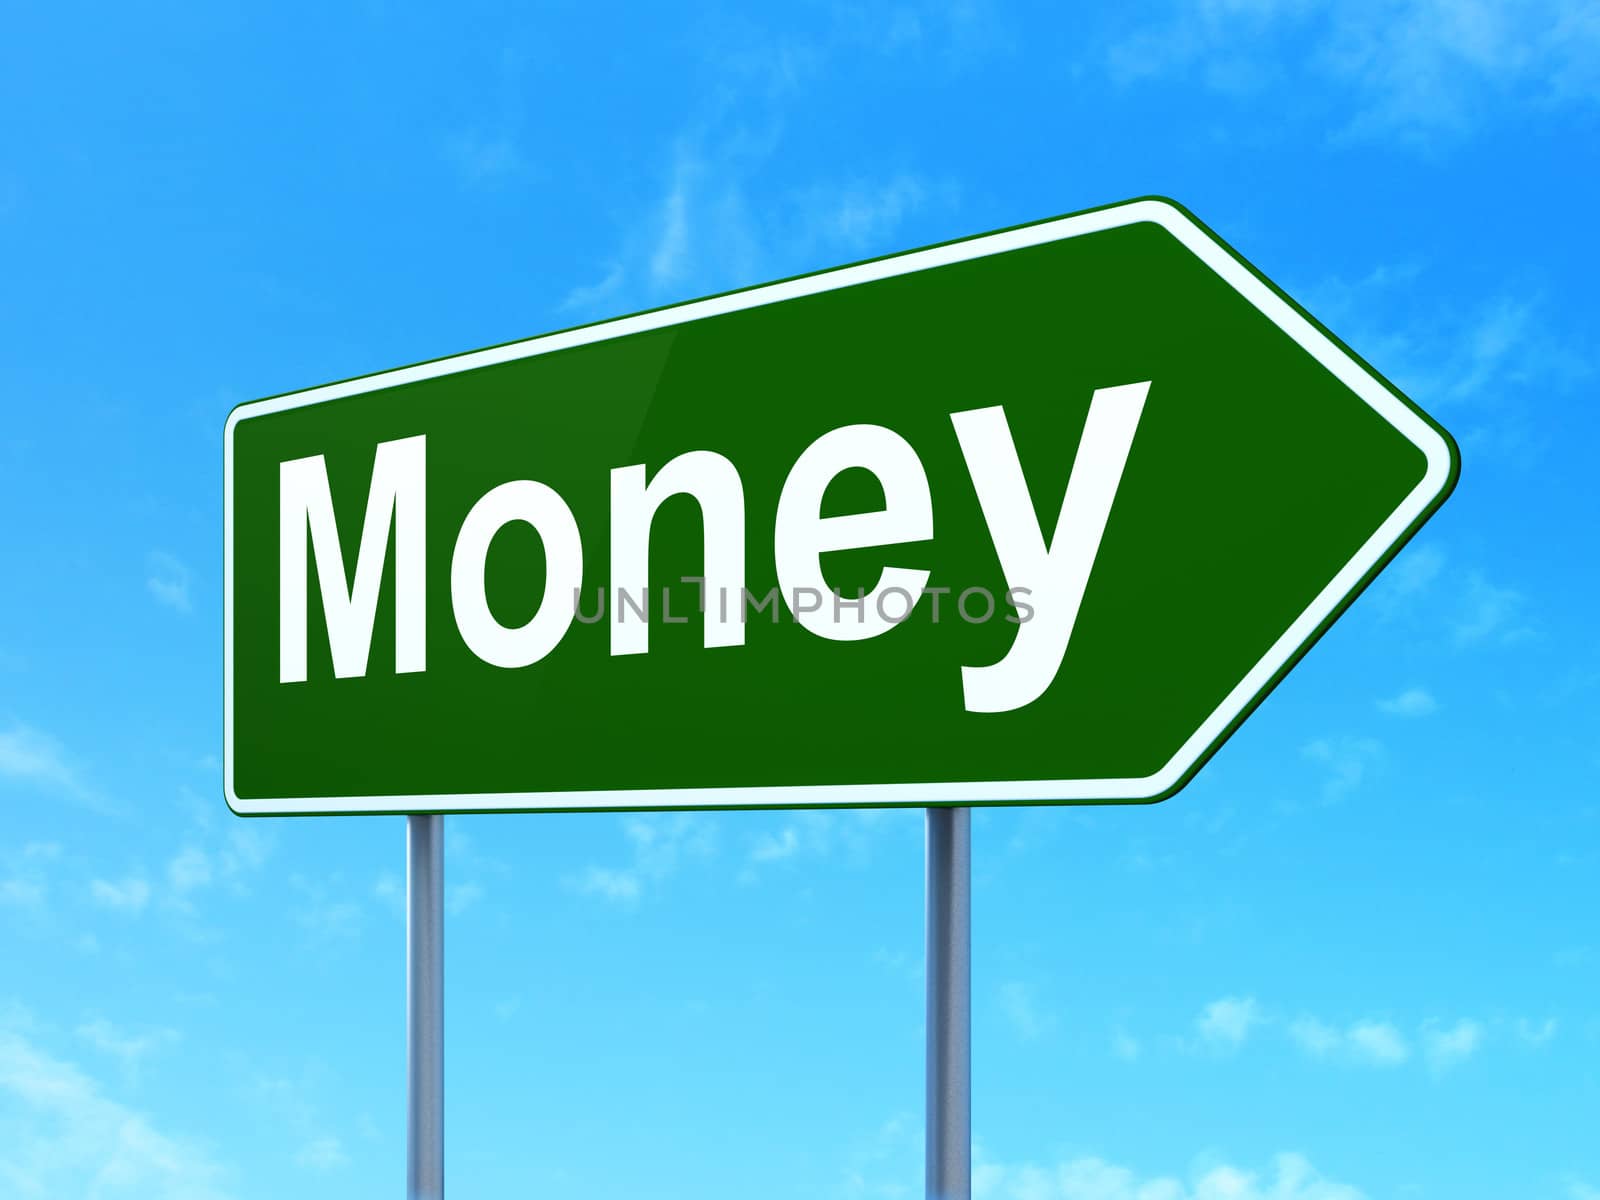 Finance concept: Money on green road (highway) sign, clear blue sky background, 3d render